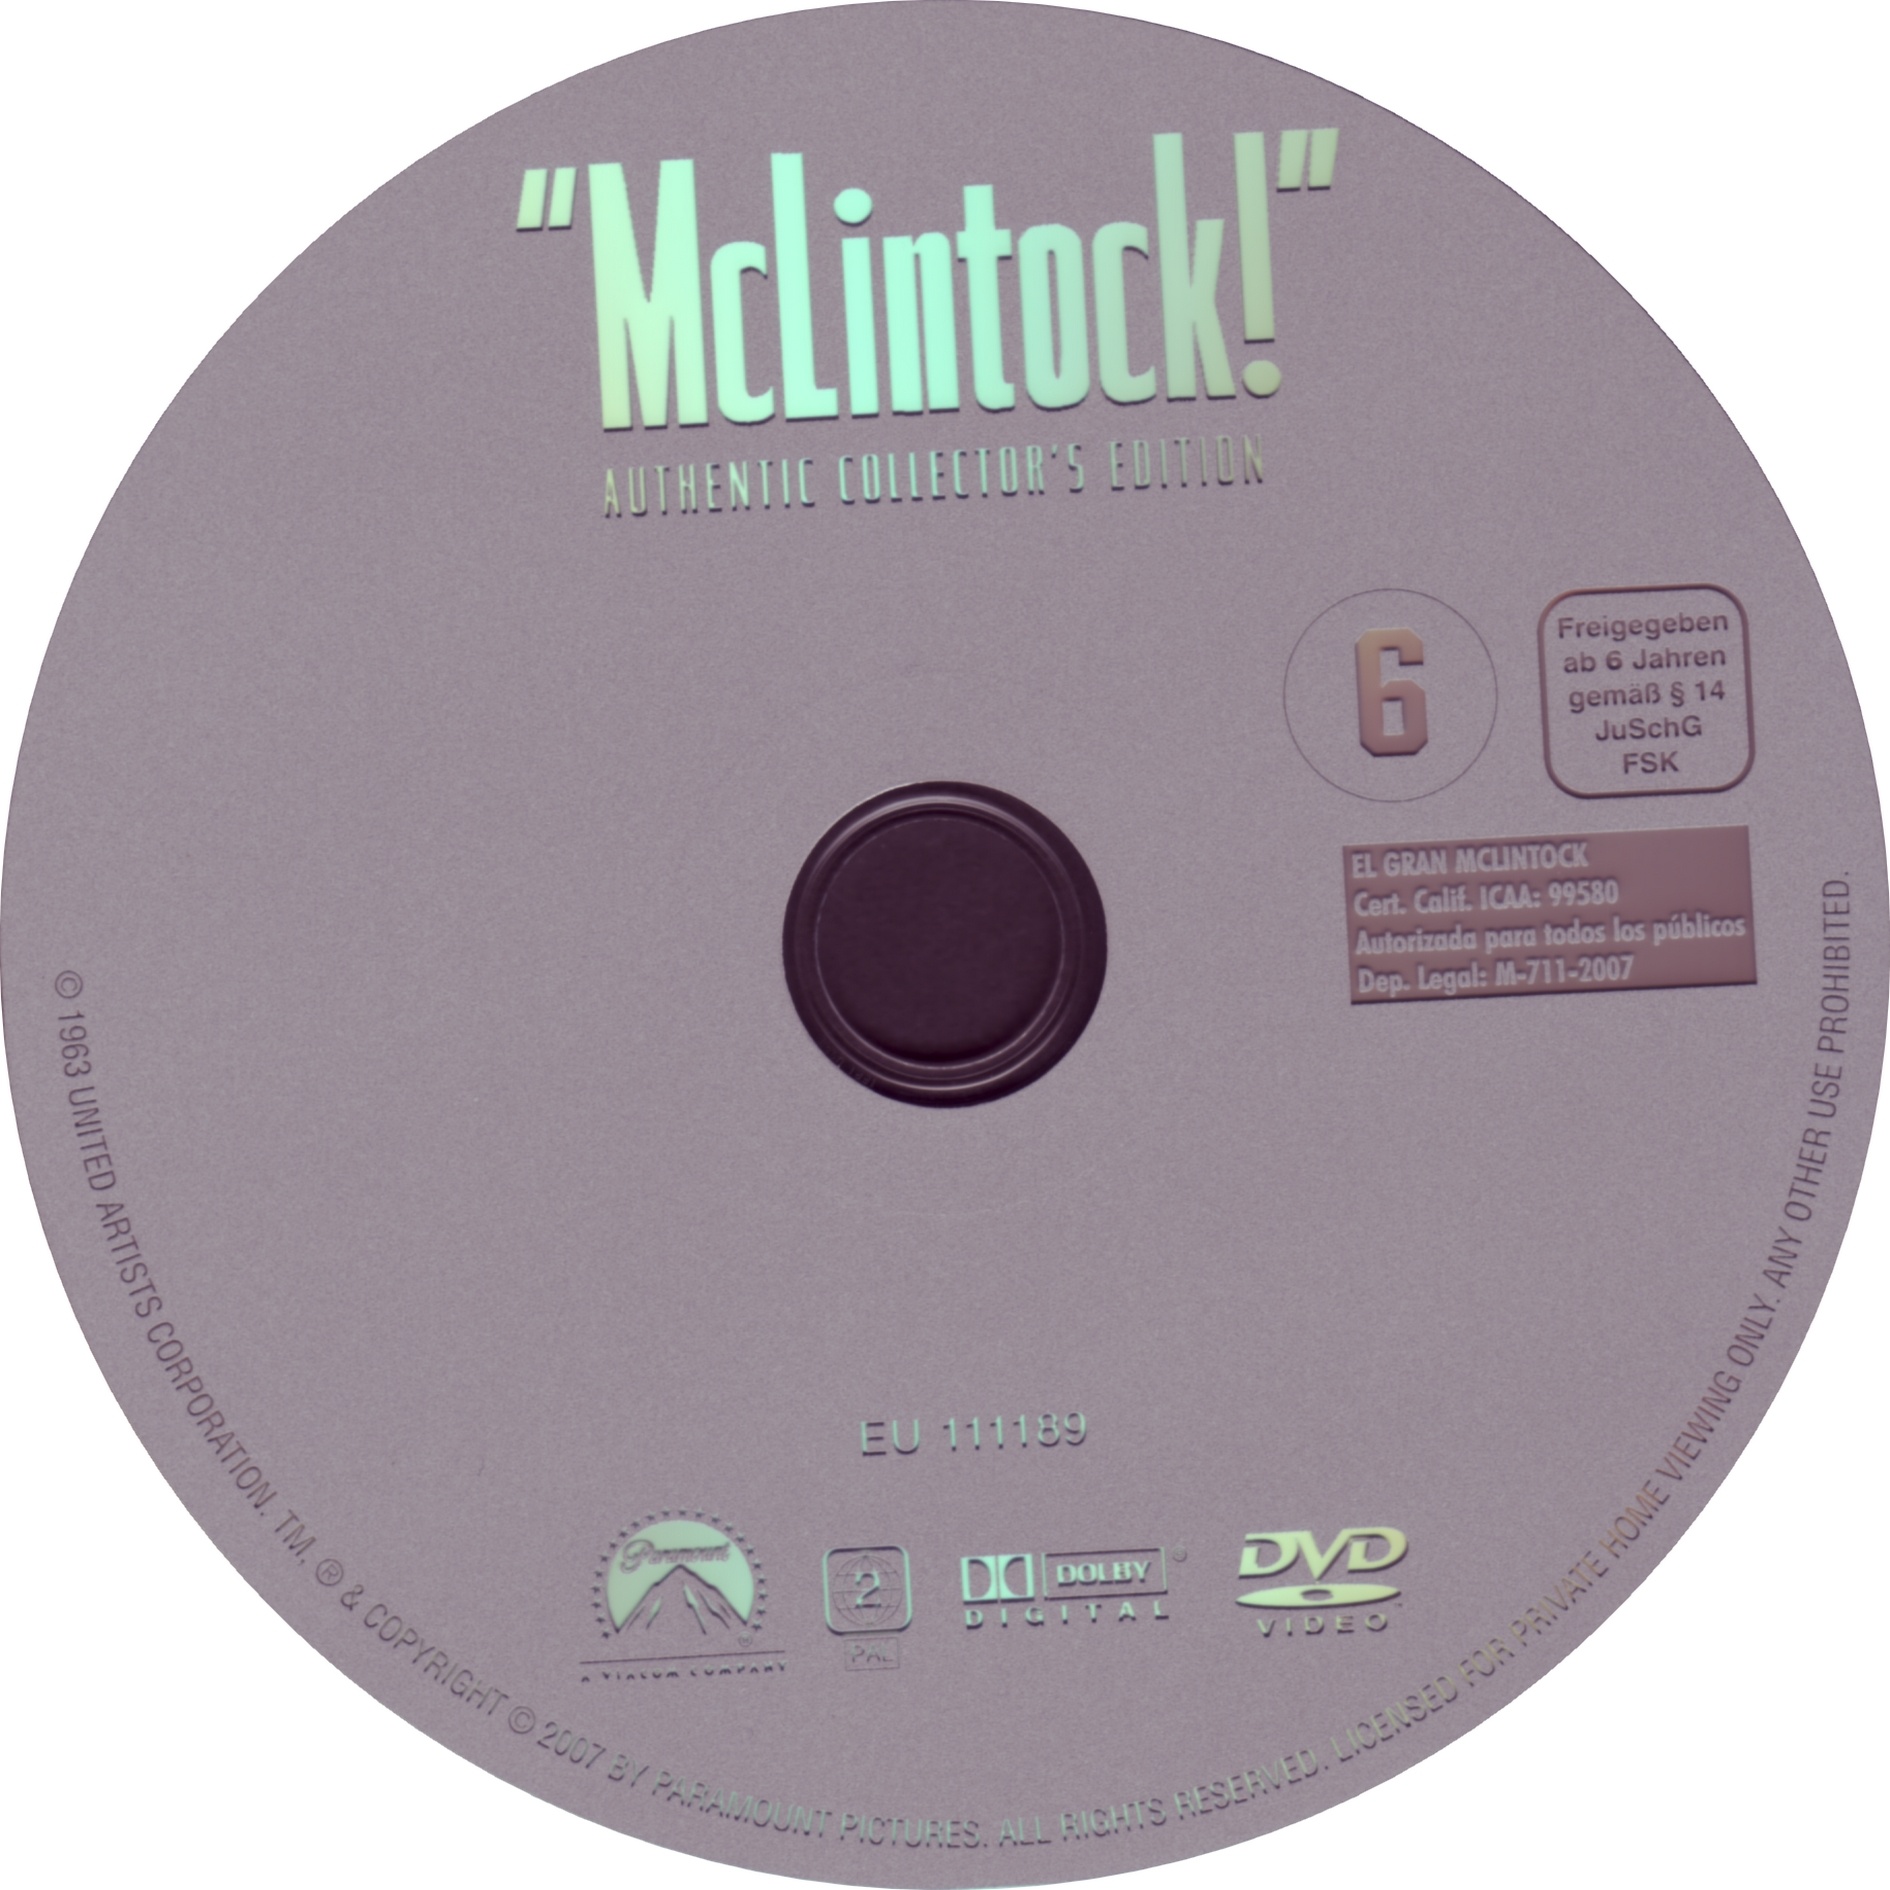 McLintock